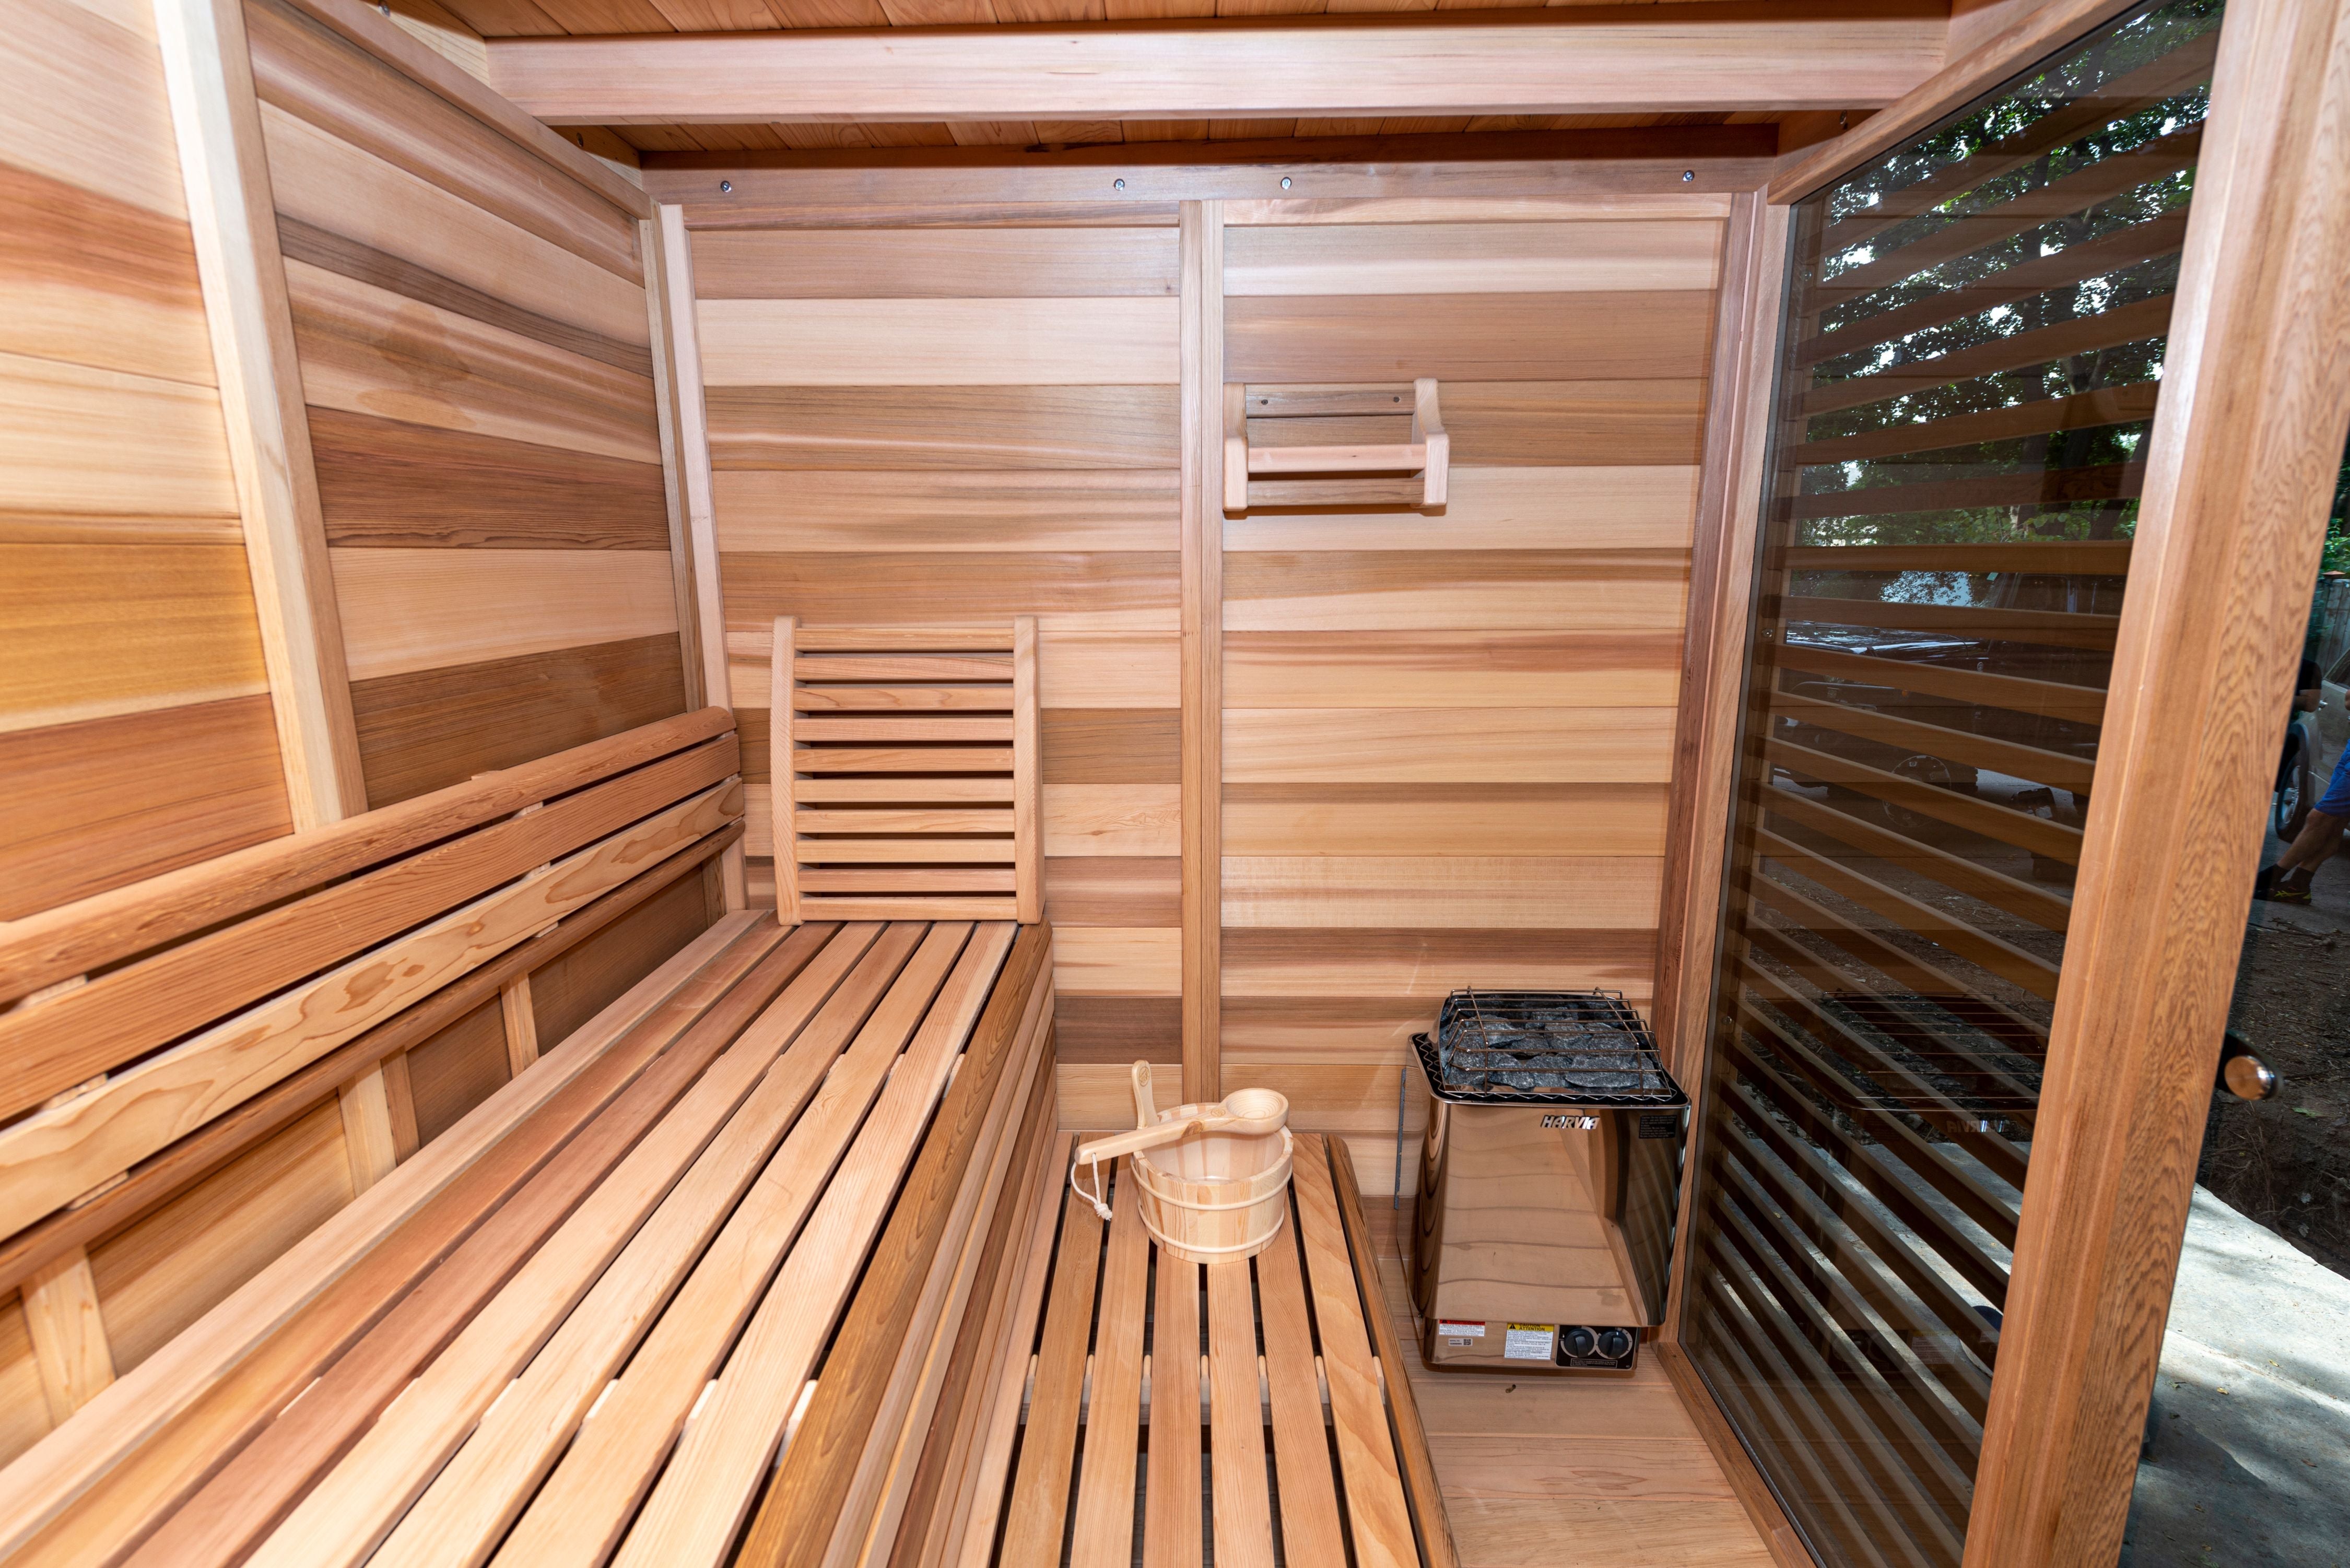 Wellform Sauna Shaper • Home Shopping Selections